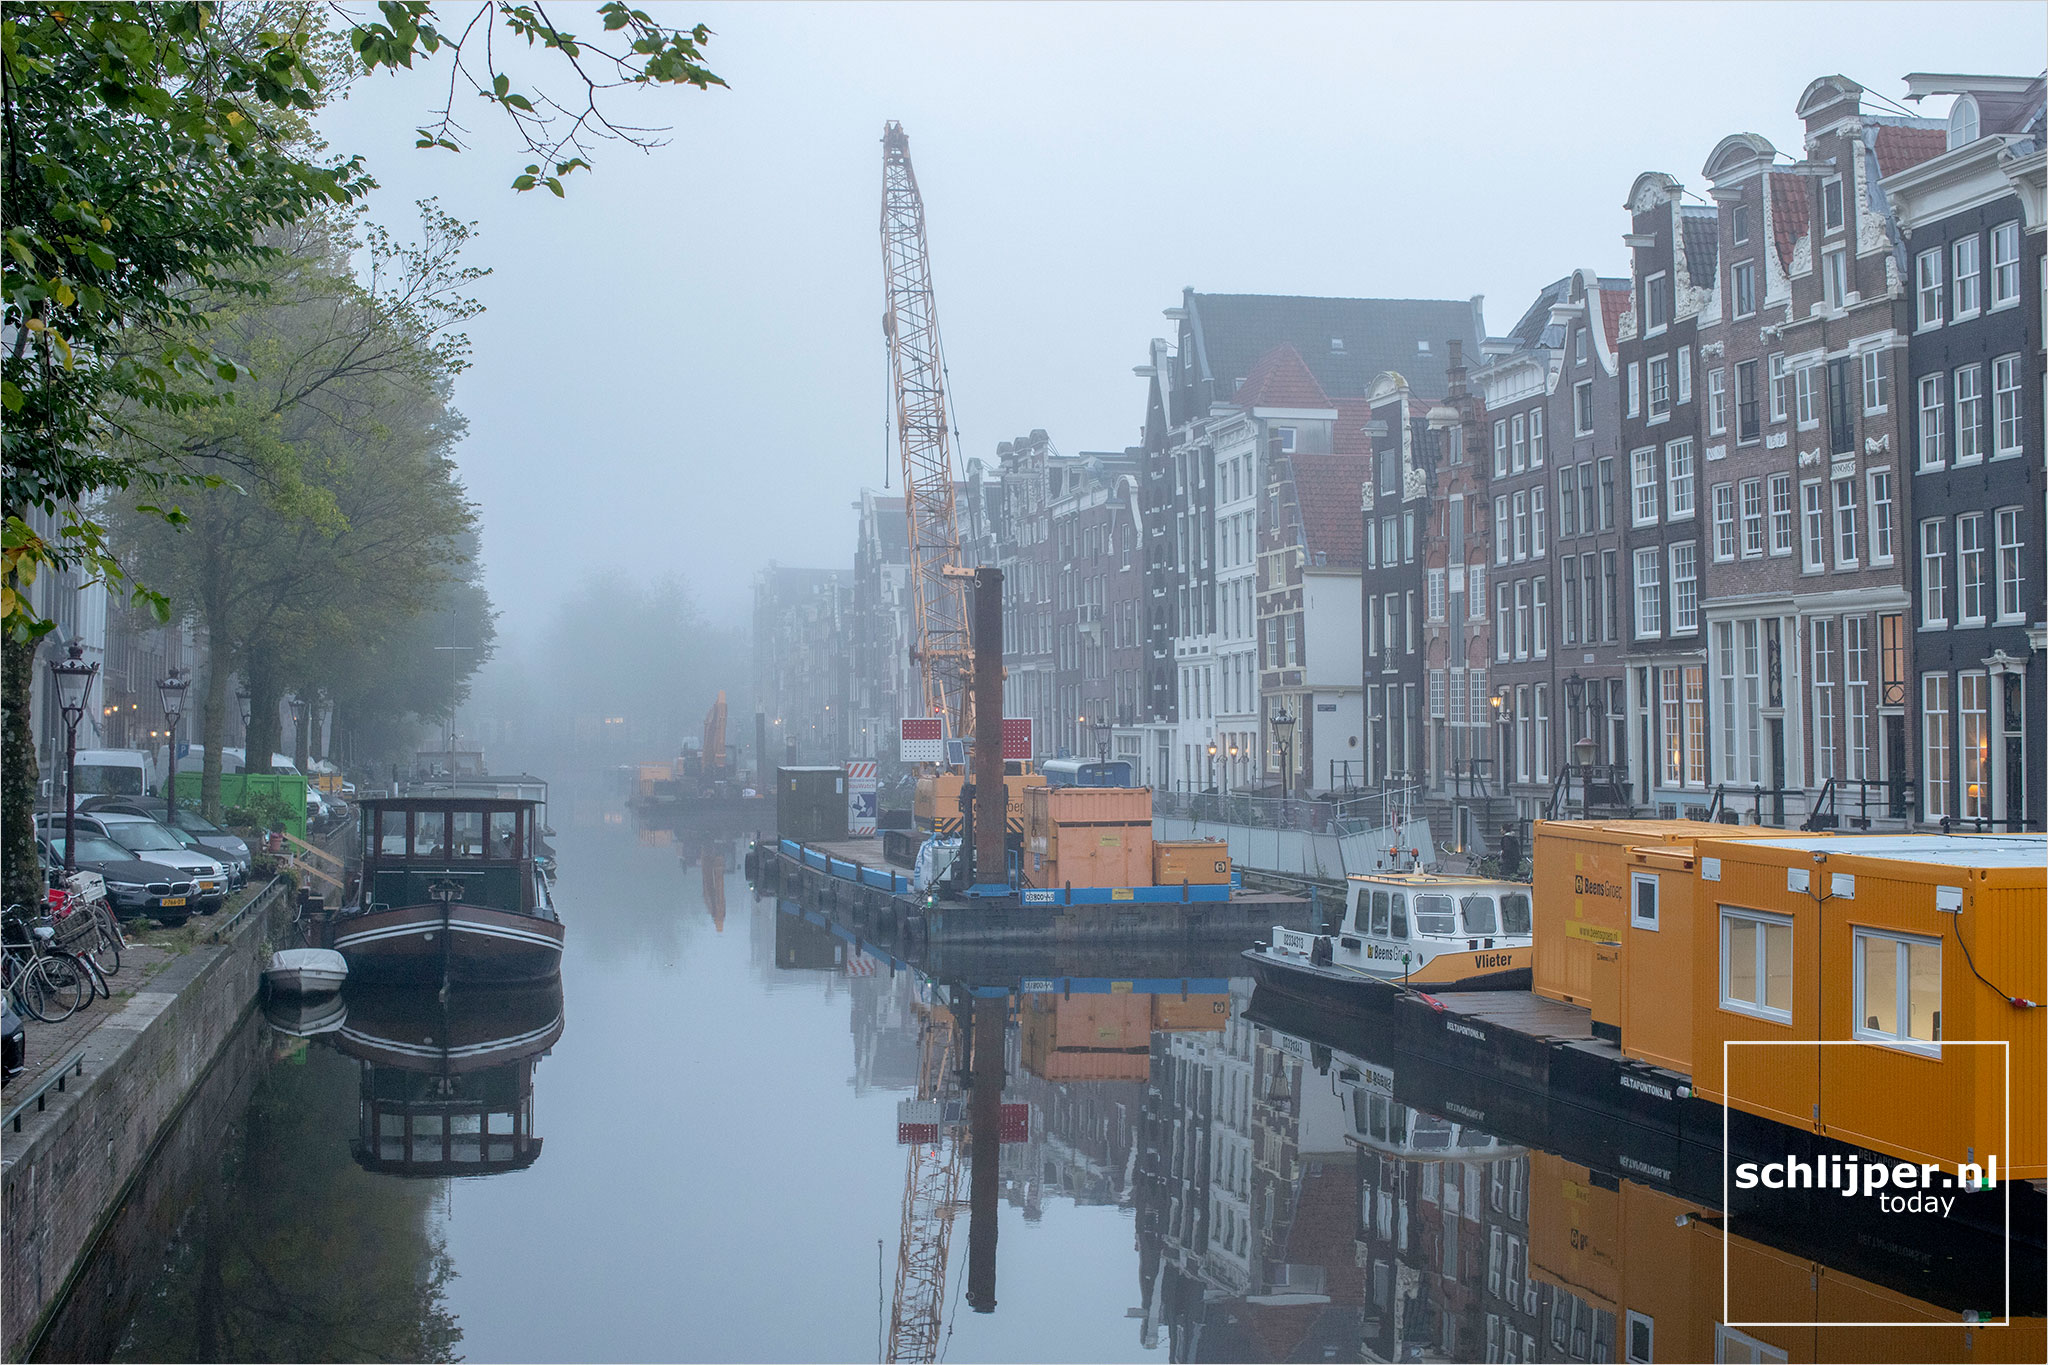 The Netherlands, Amsterdam, 8 oktober 2021